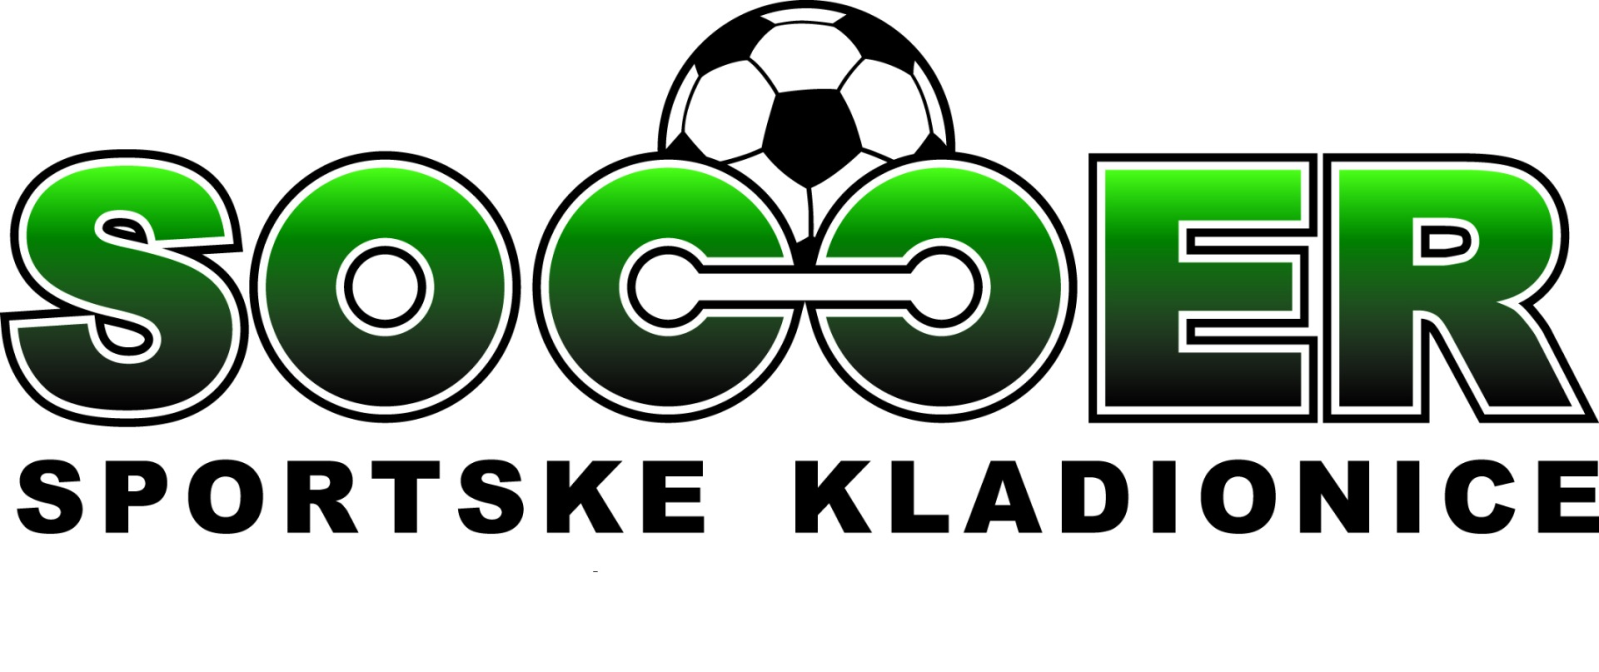 Sportske. Букмекерские конторы логотипы. Sportske_Cross.